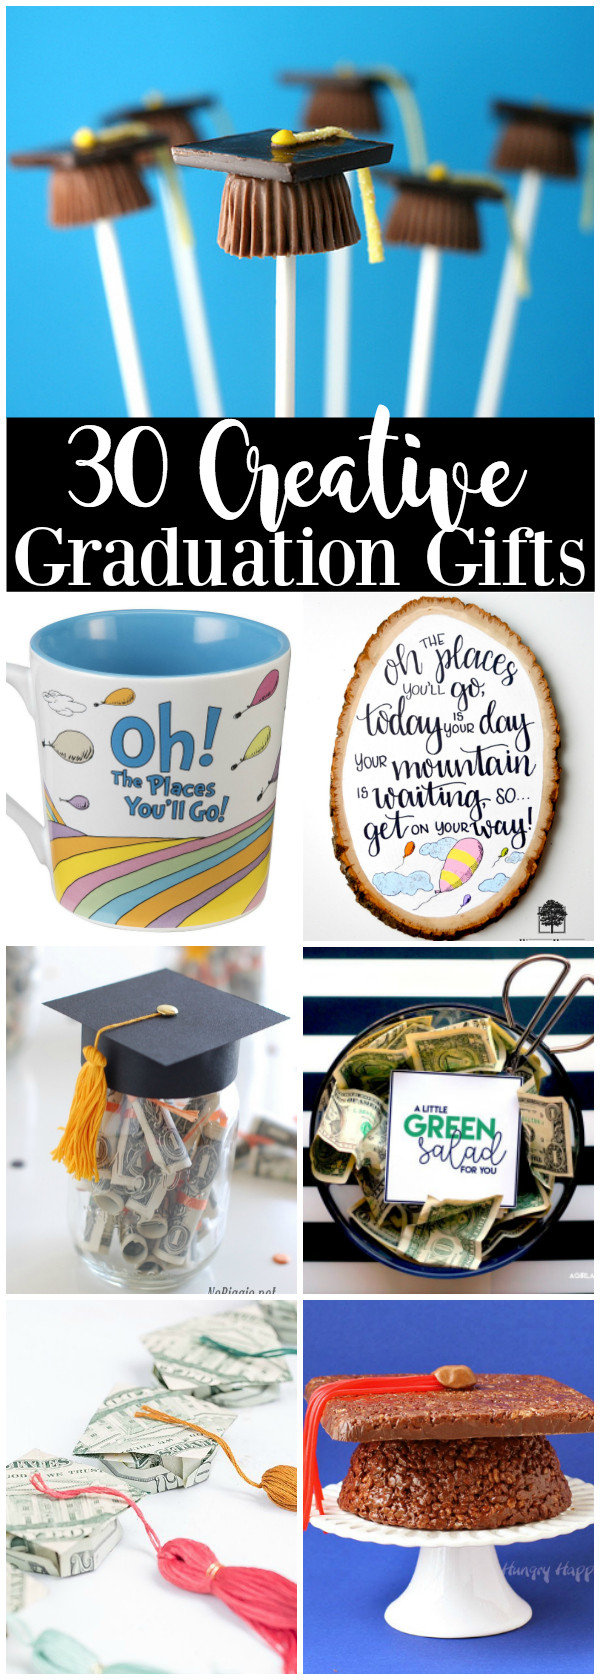 Cool Graduation Gift Ideas
 30 Creative Graduation Gift Ideas